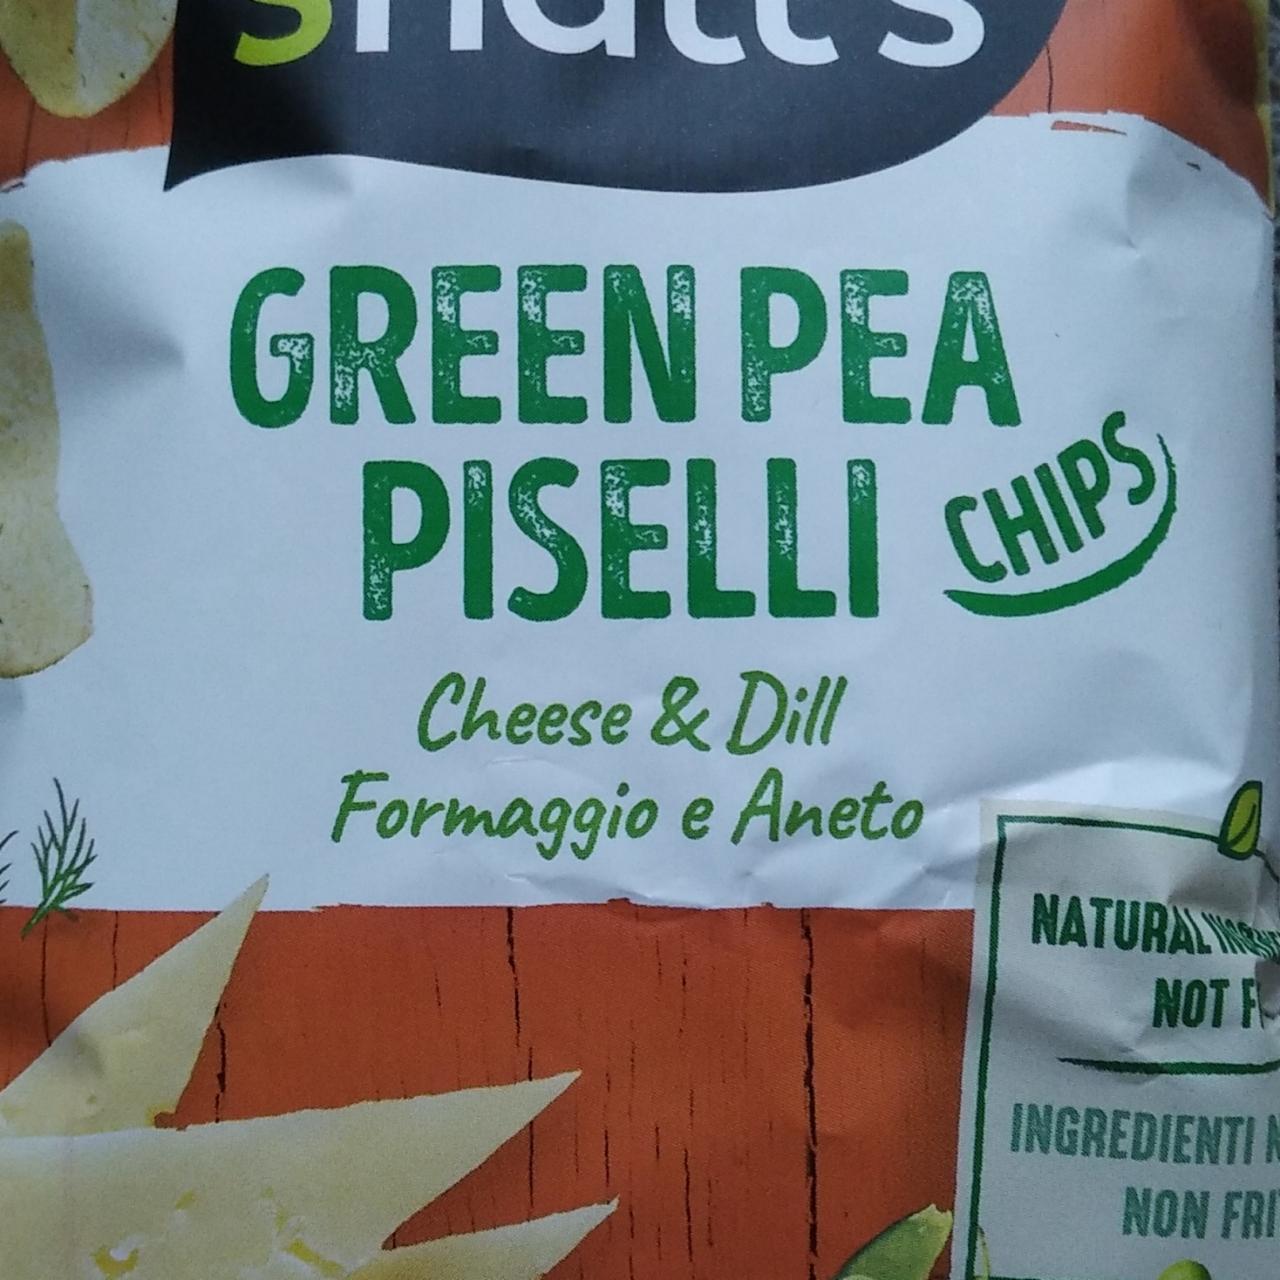 Fotografie - Green Pea Piselli Chips Cheese & Dill Snatt's